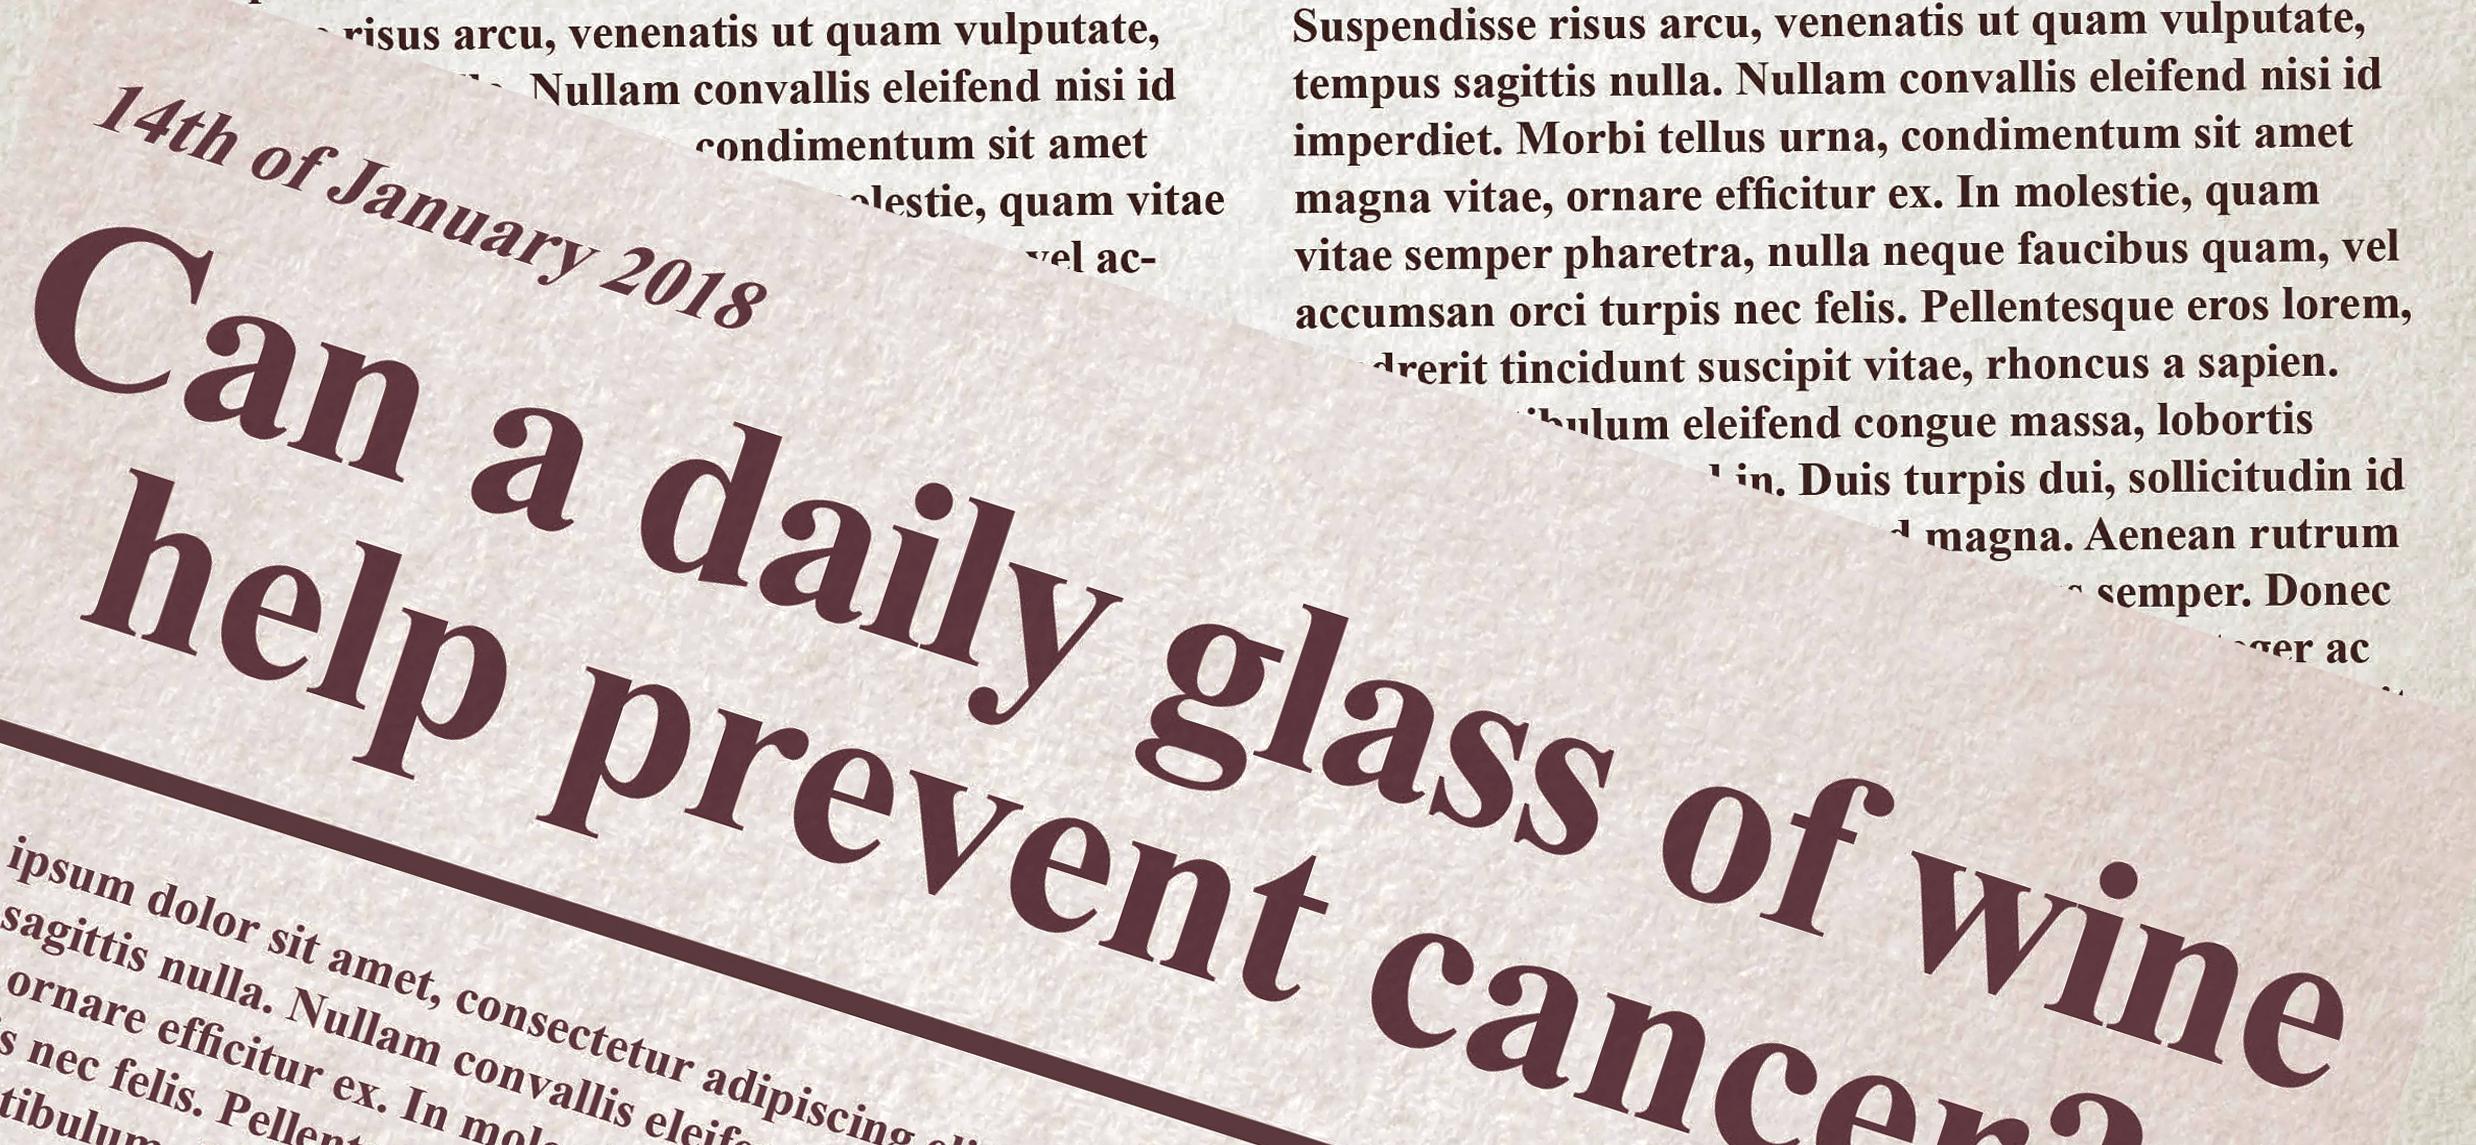 Newspaper headlines about health